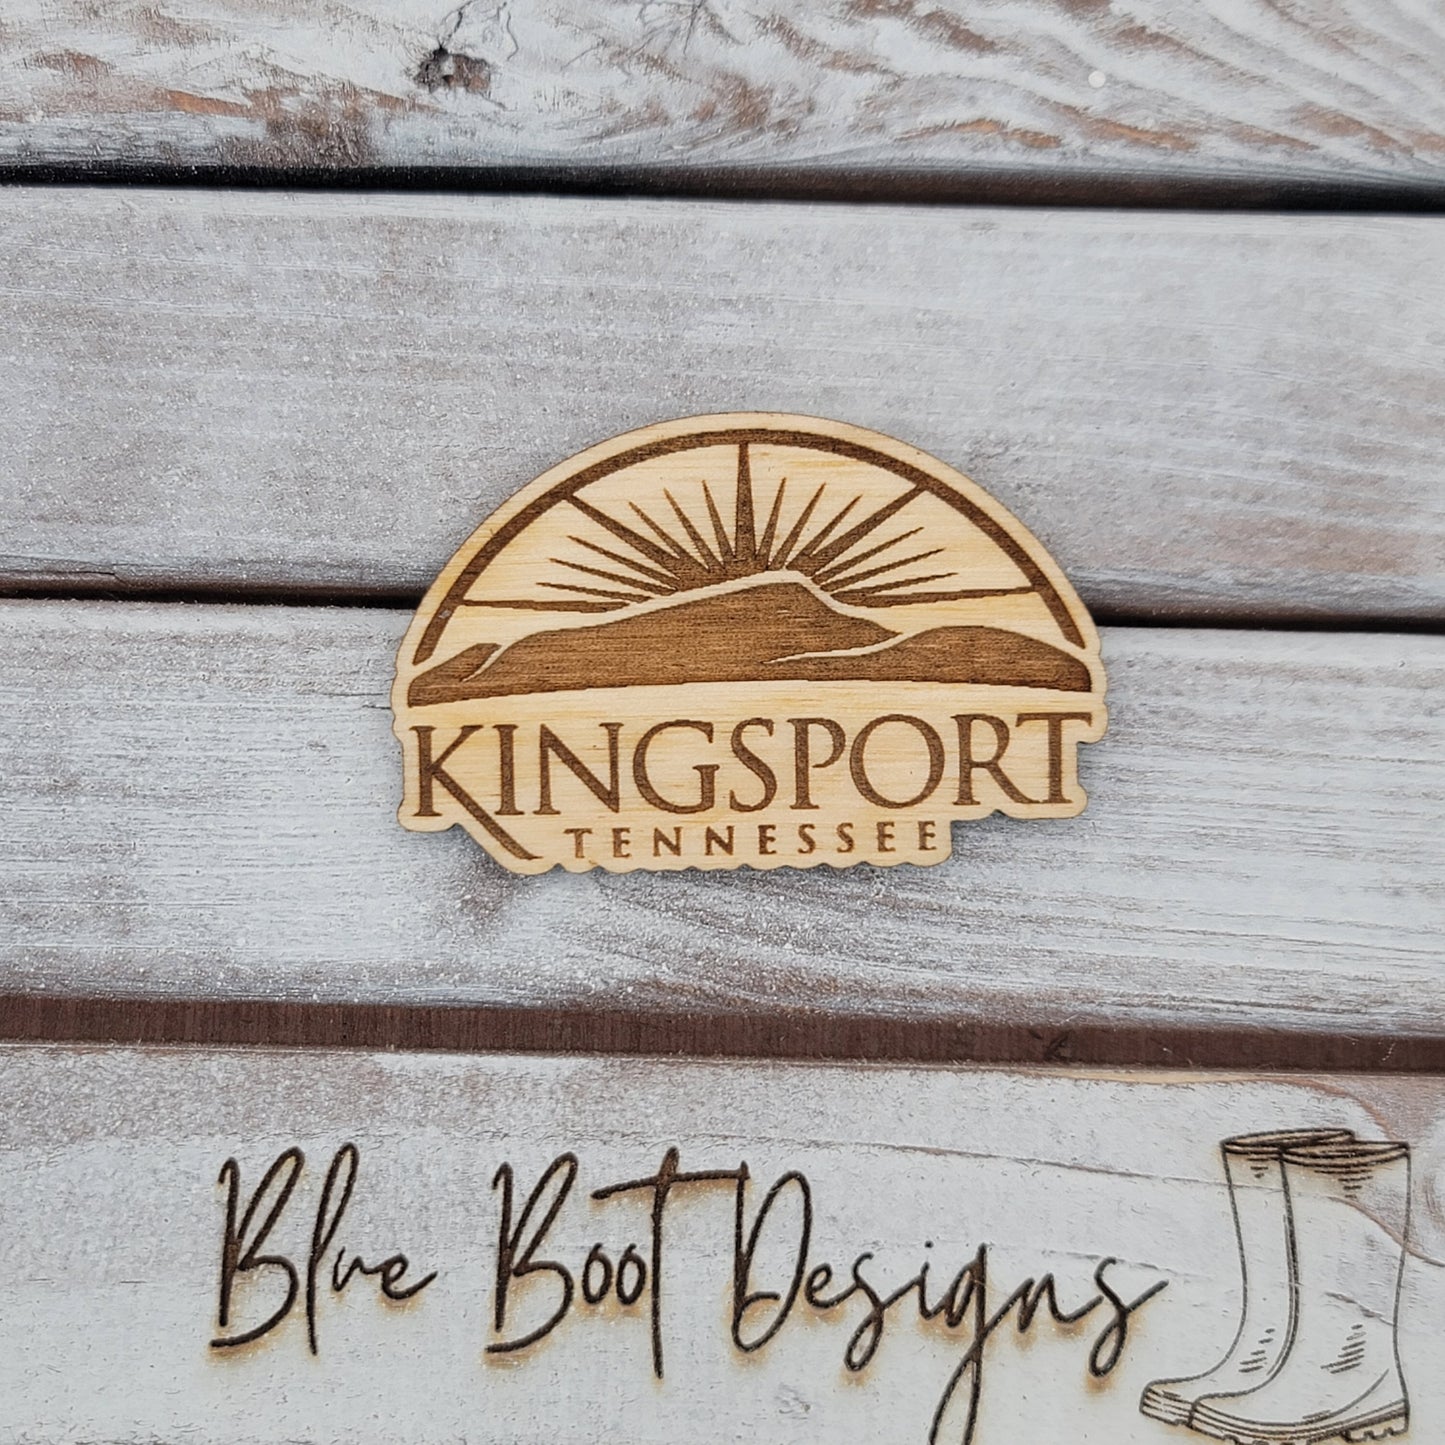 Kingsport Magnet